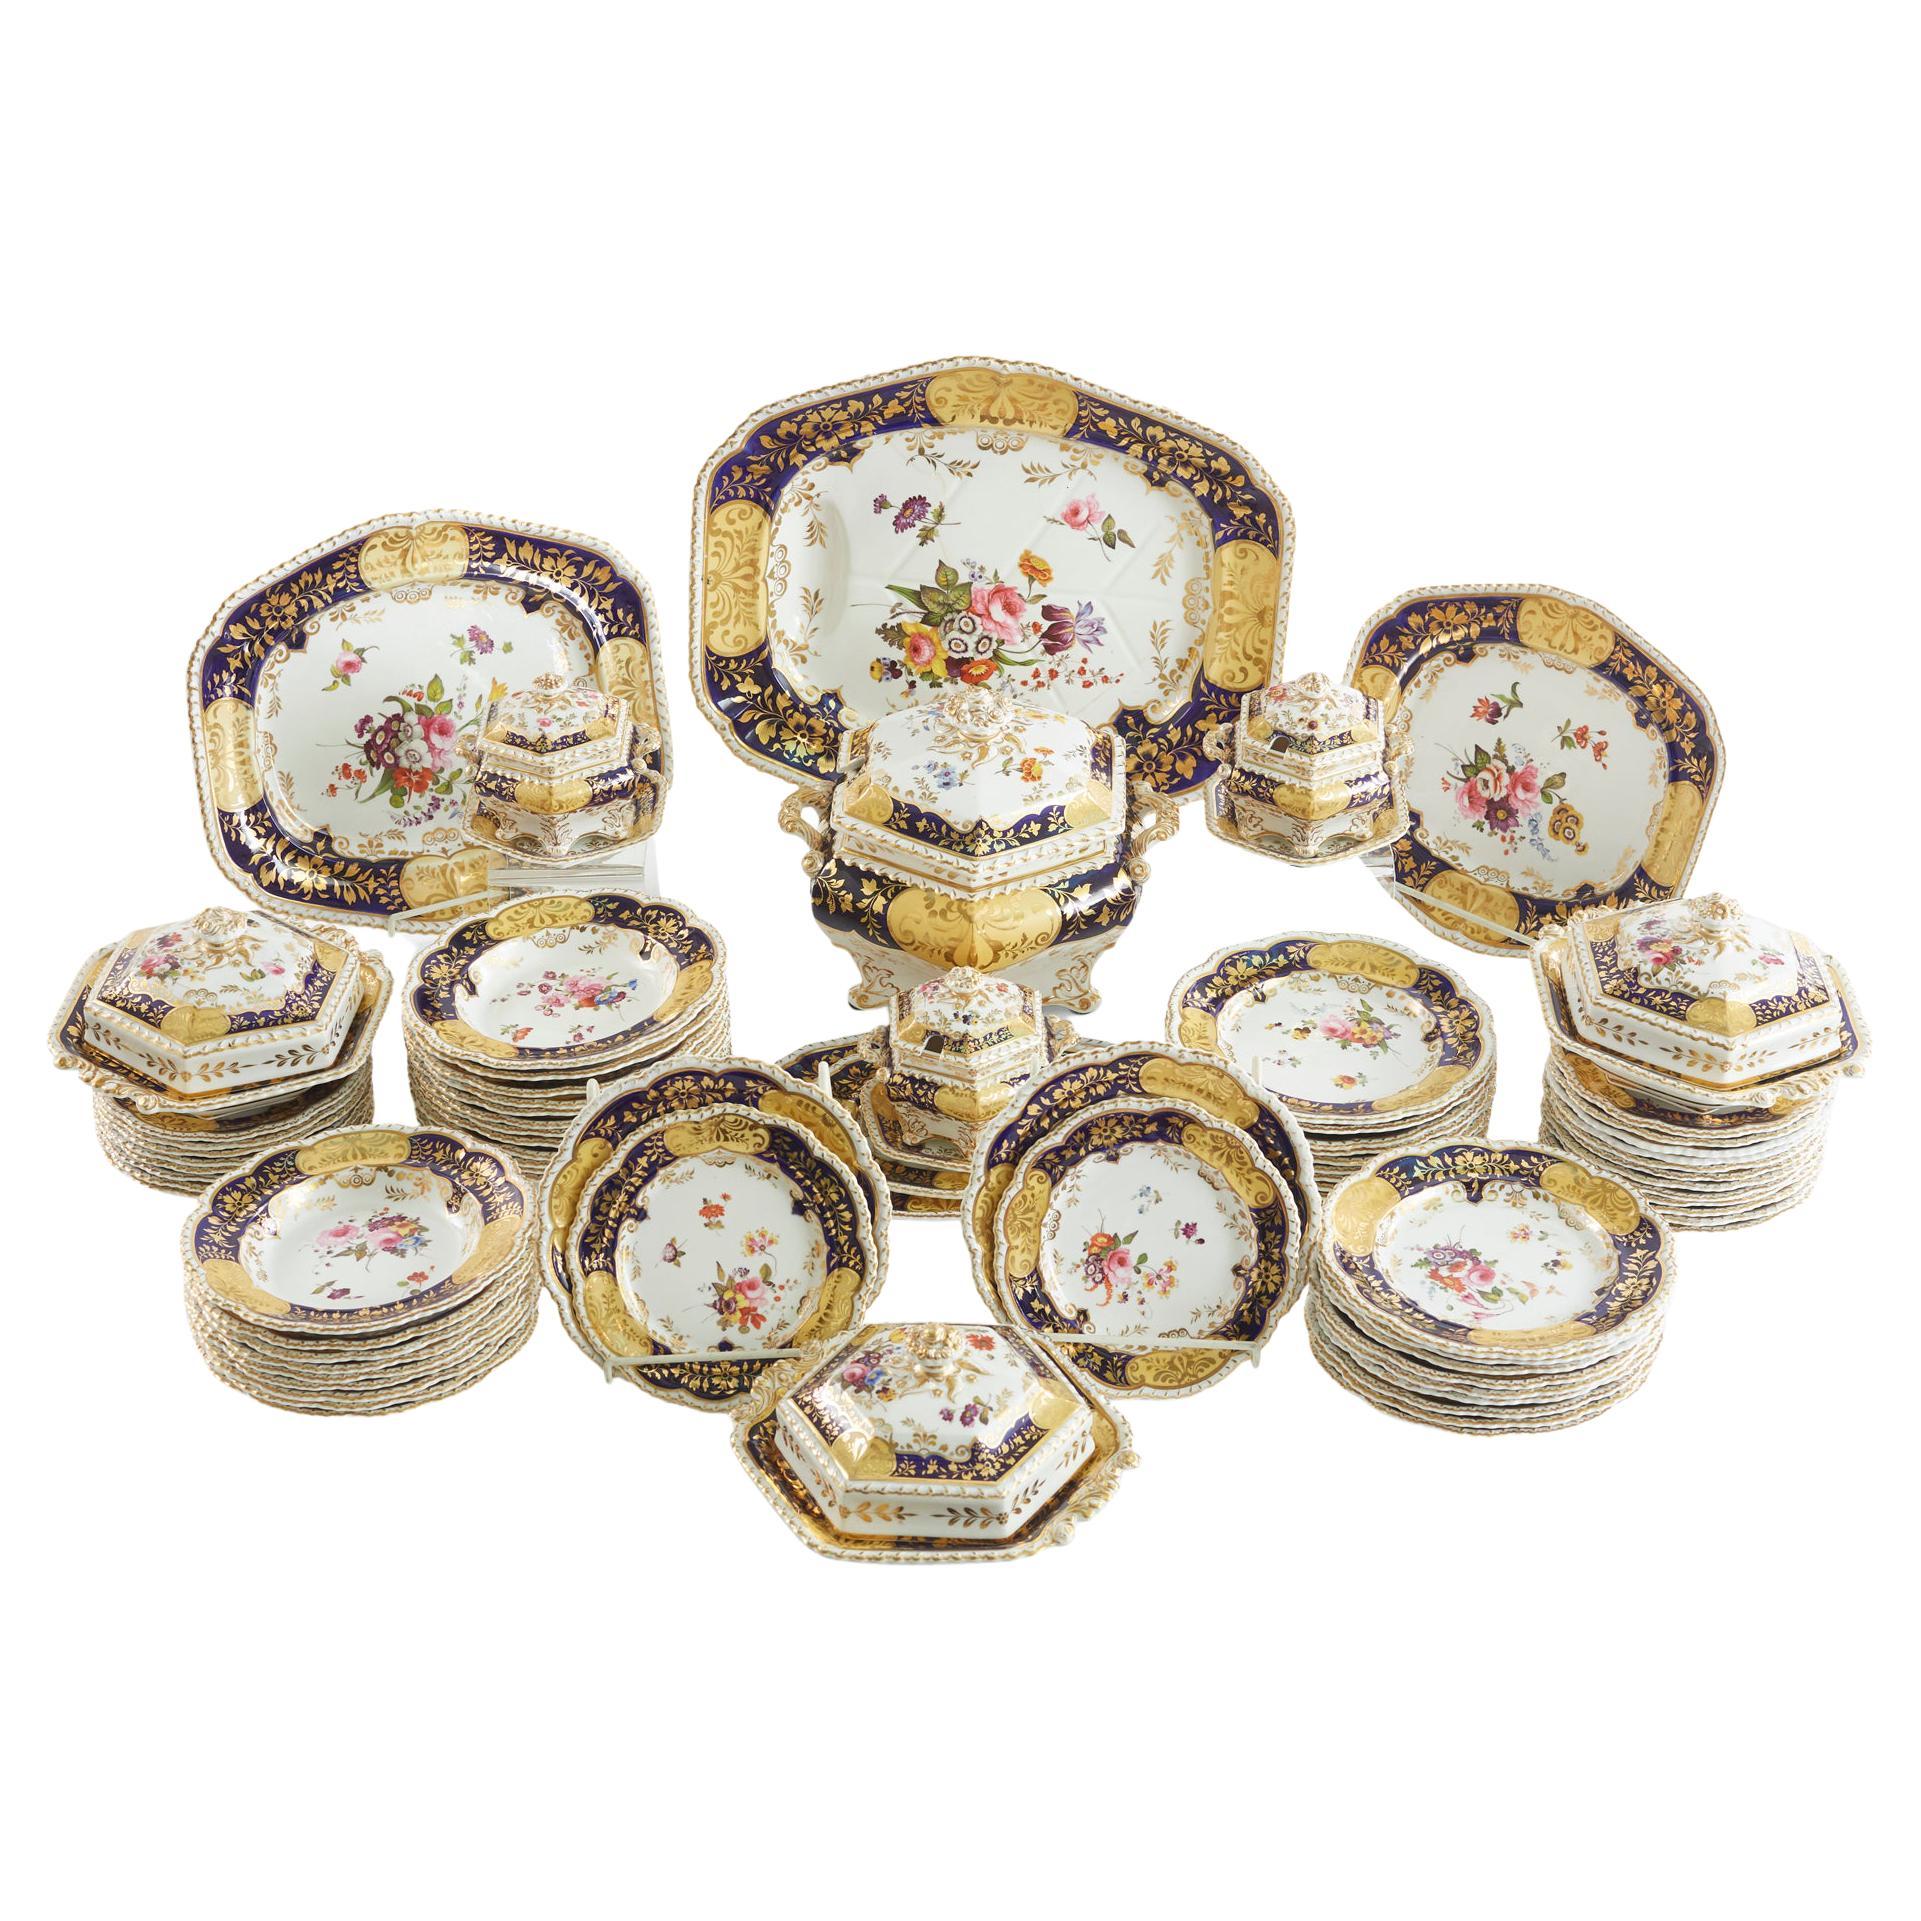 19th Century British Porcelain Dinnerware Service